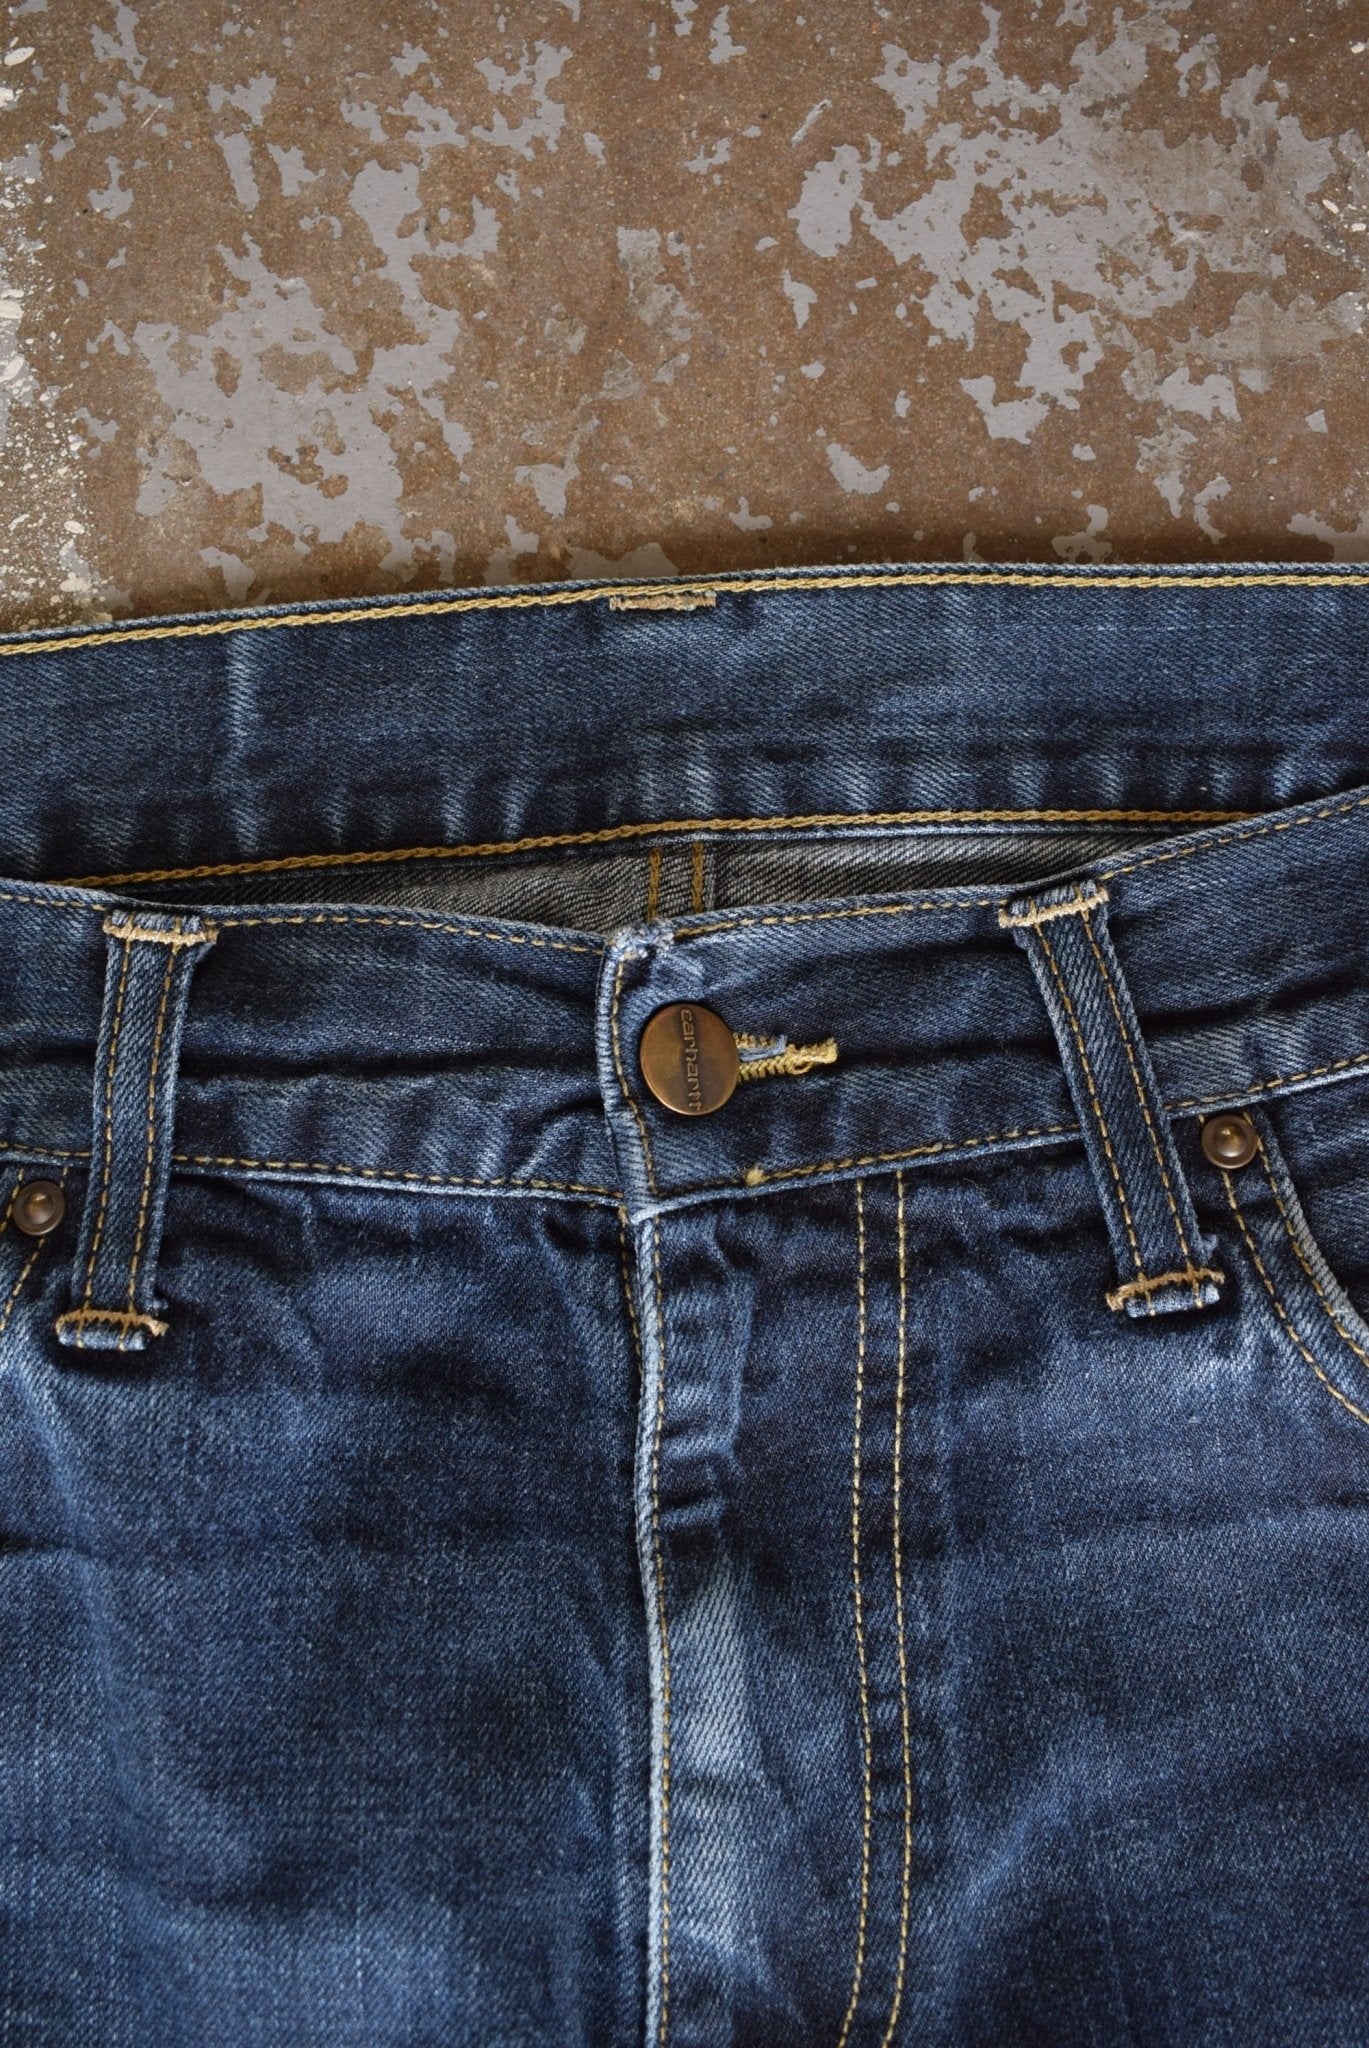 Vintage Carhartt Workwear Jeans (32) - Retrospective Store